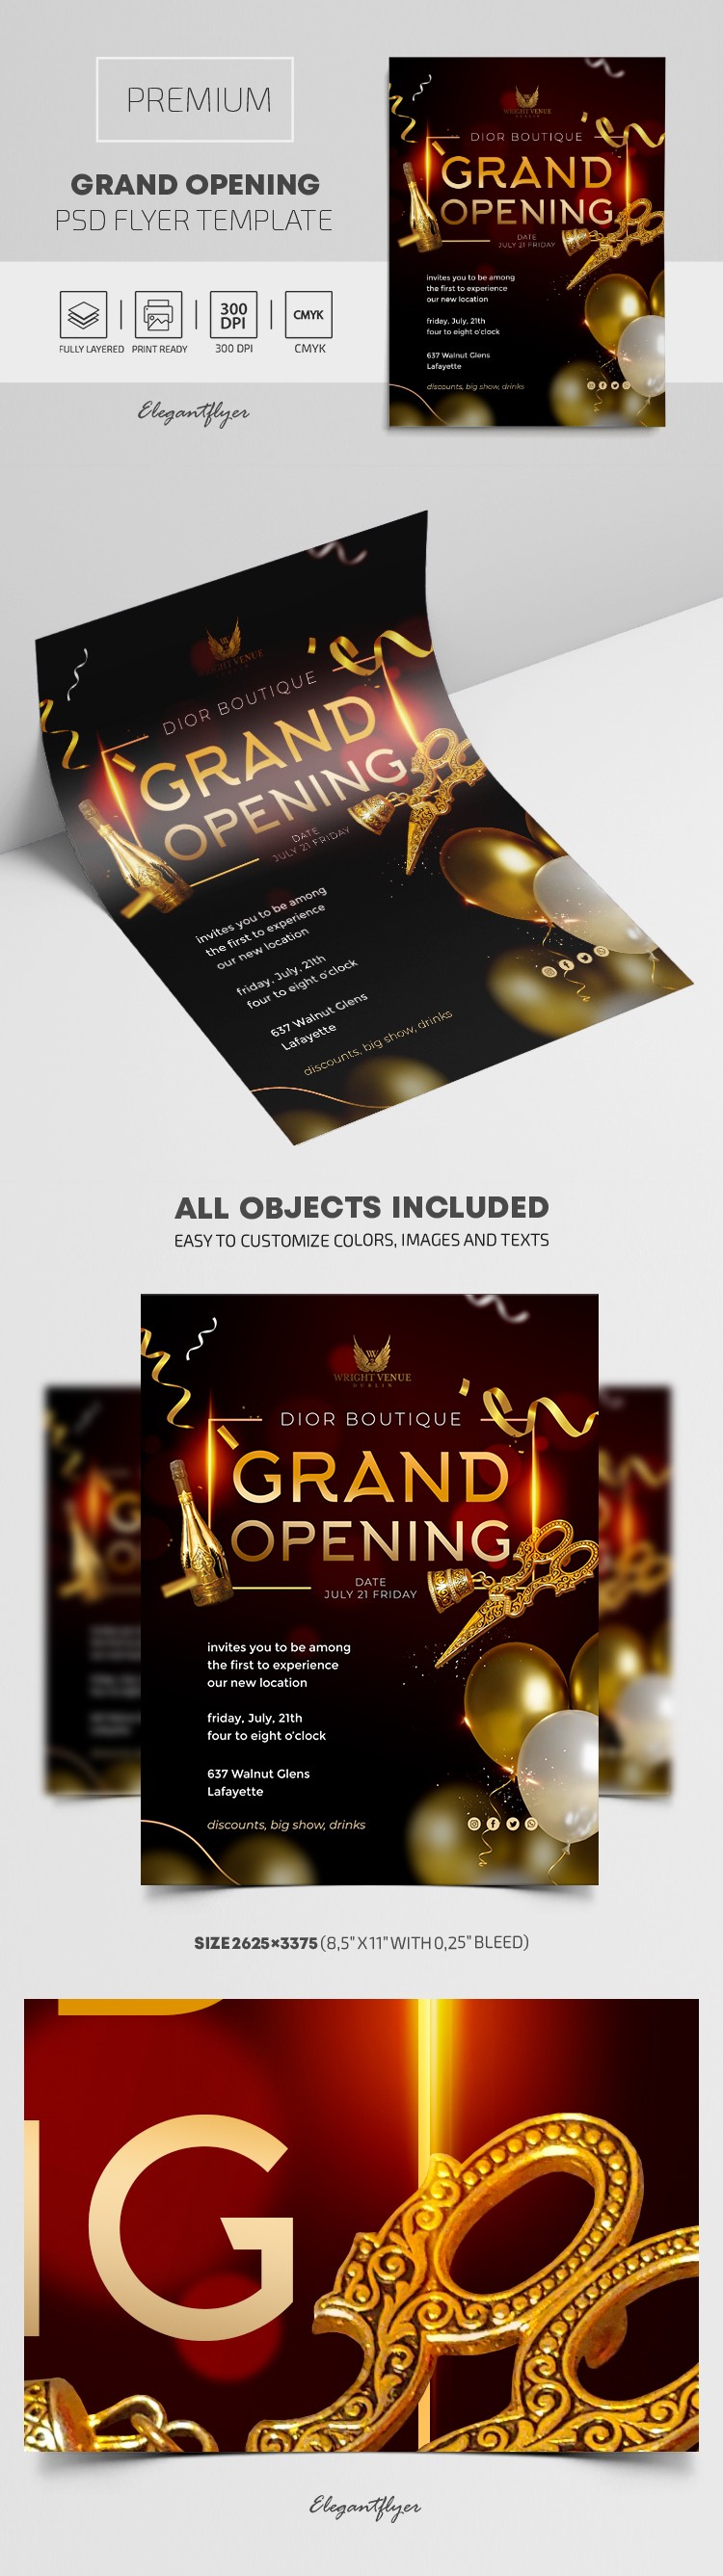 Grand Opening Flyer by ElegantFlyer